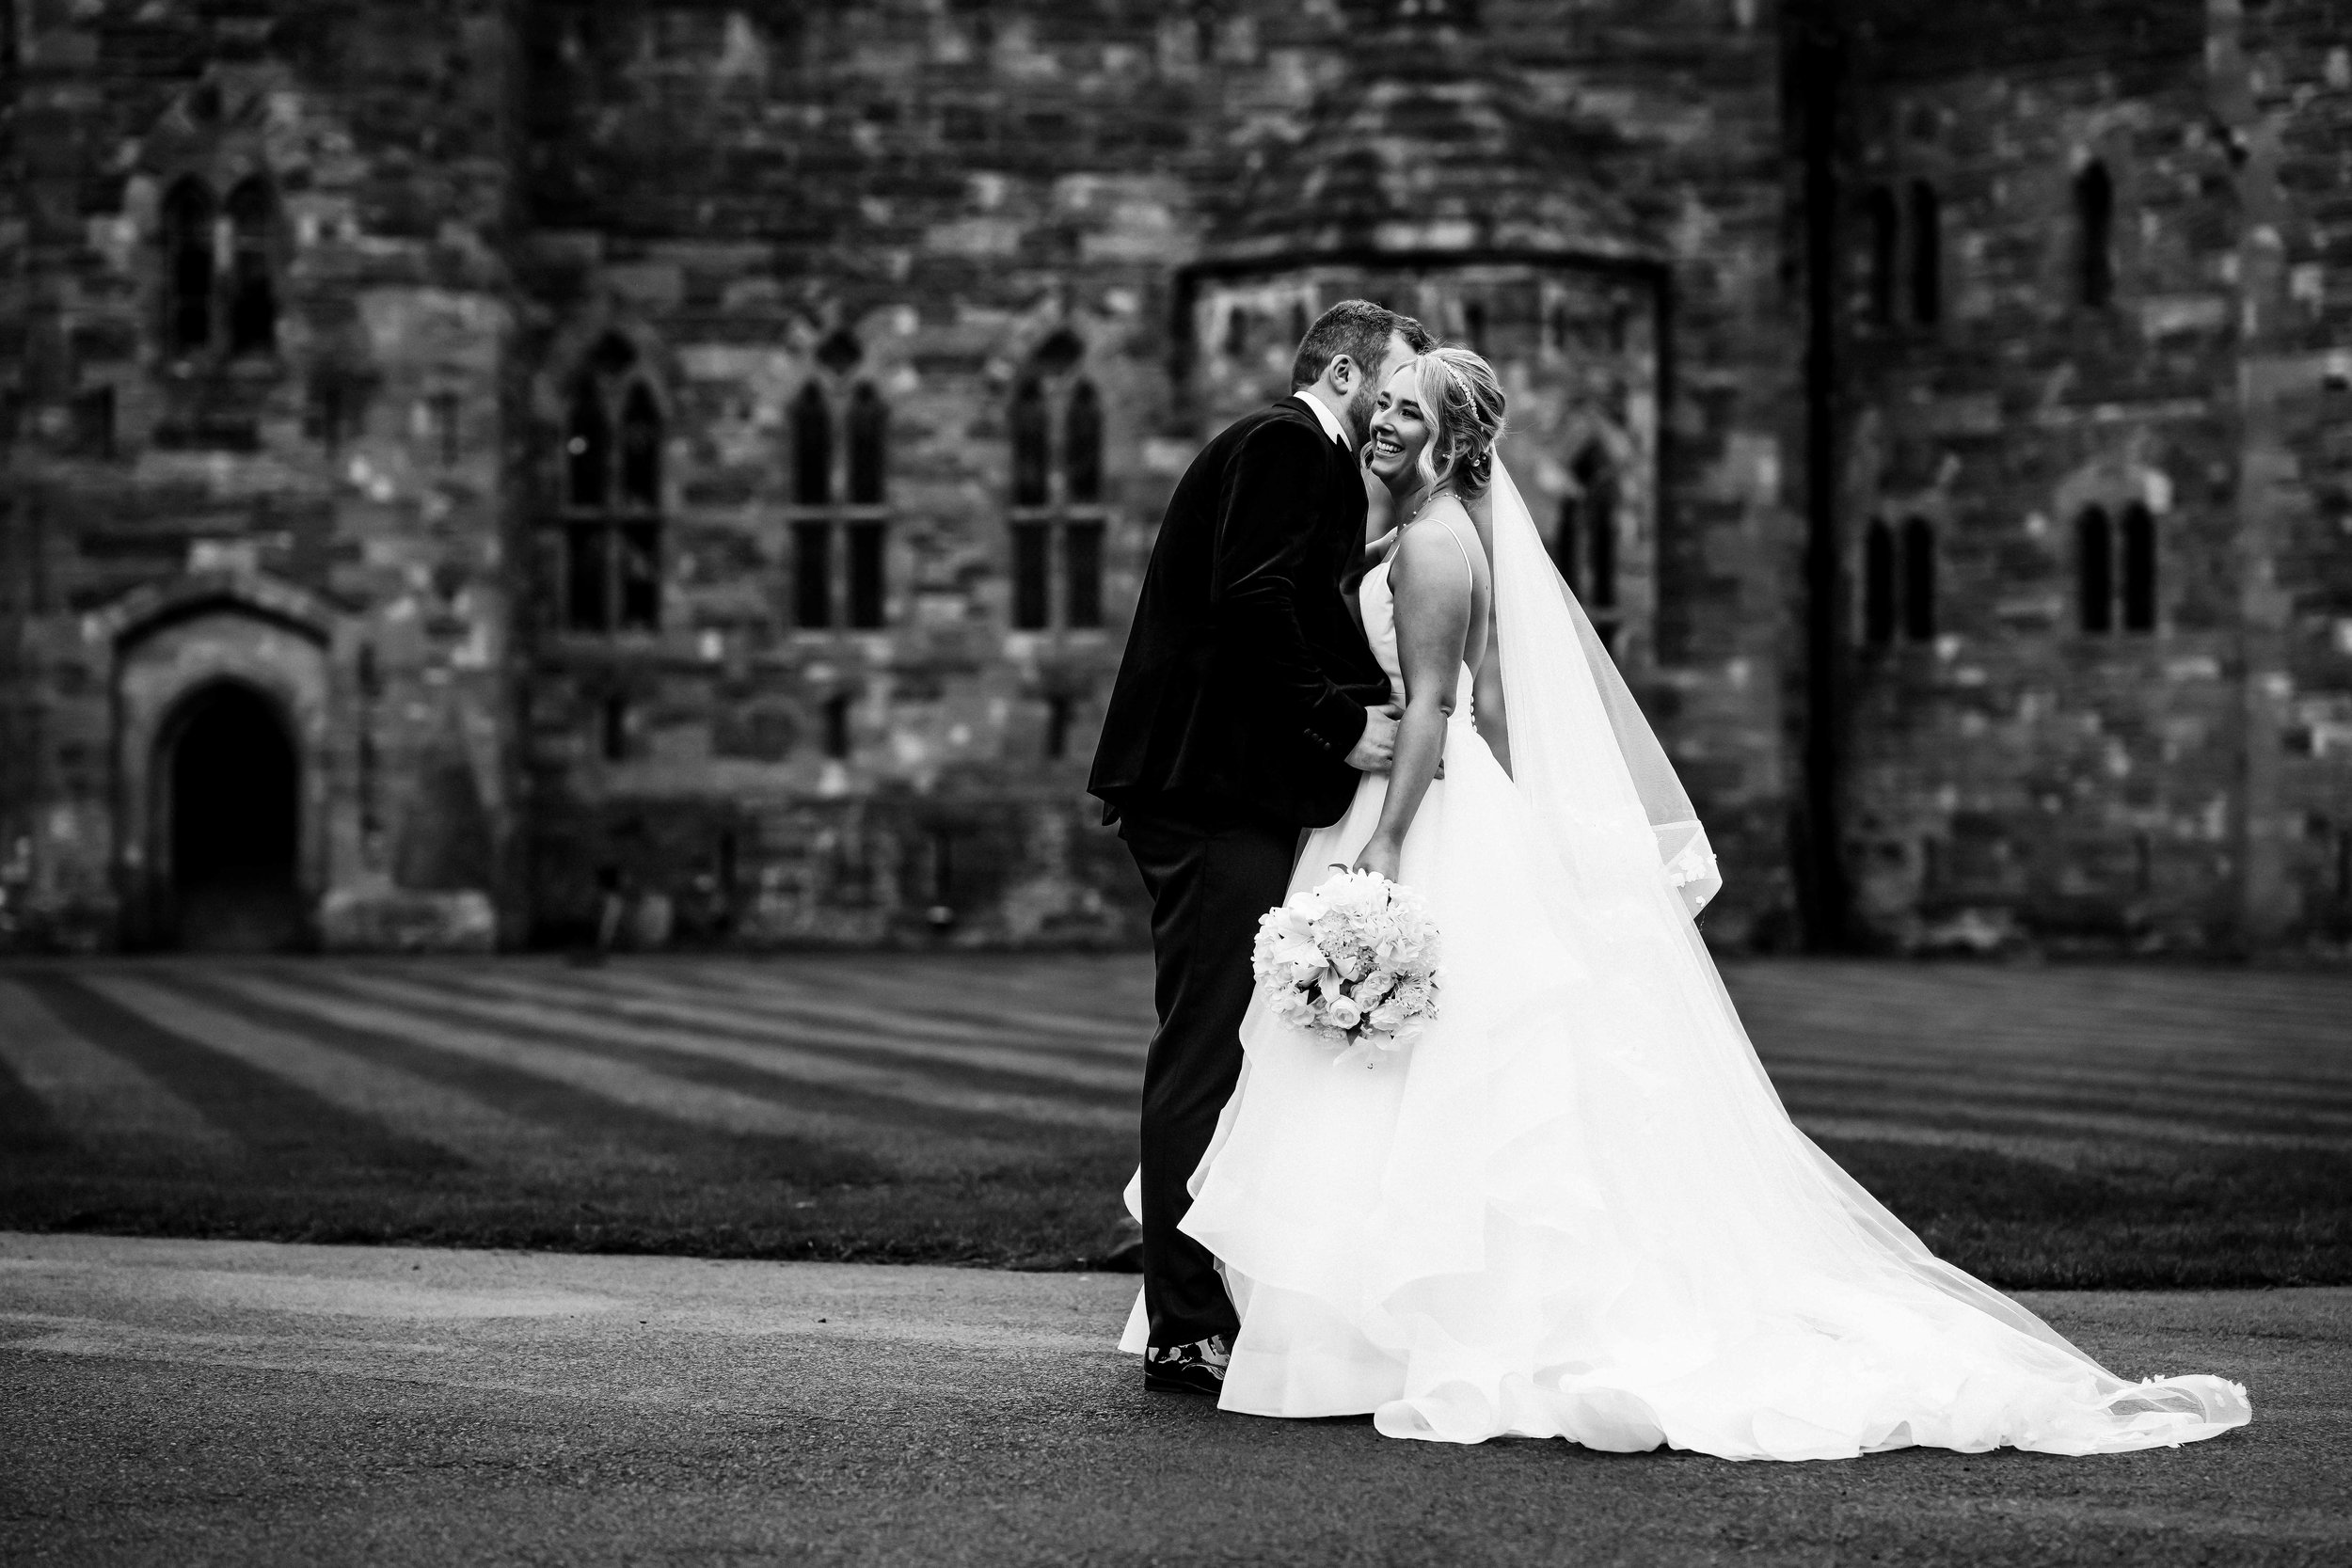 Peckforton Castle Wedding photography blog cheshire - 037.jpg